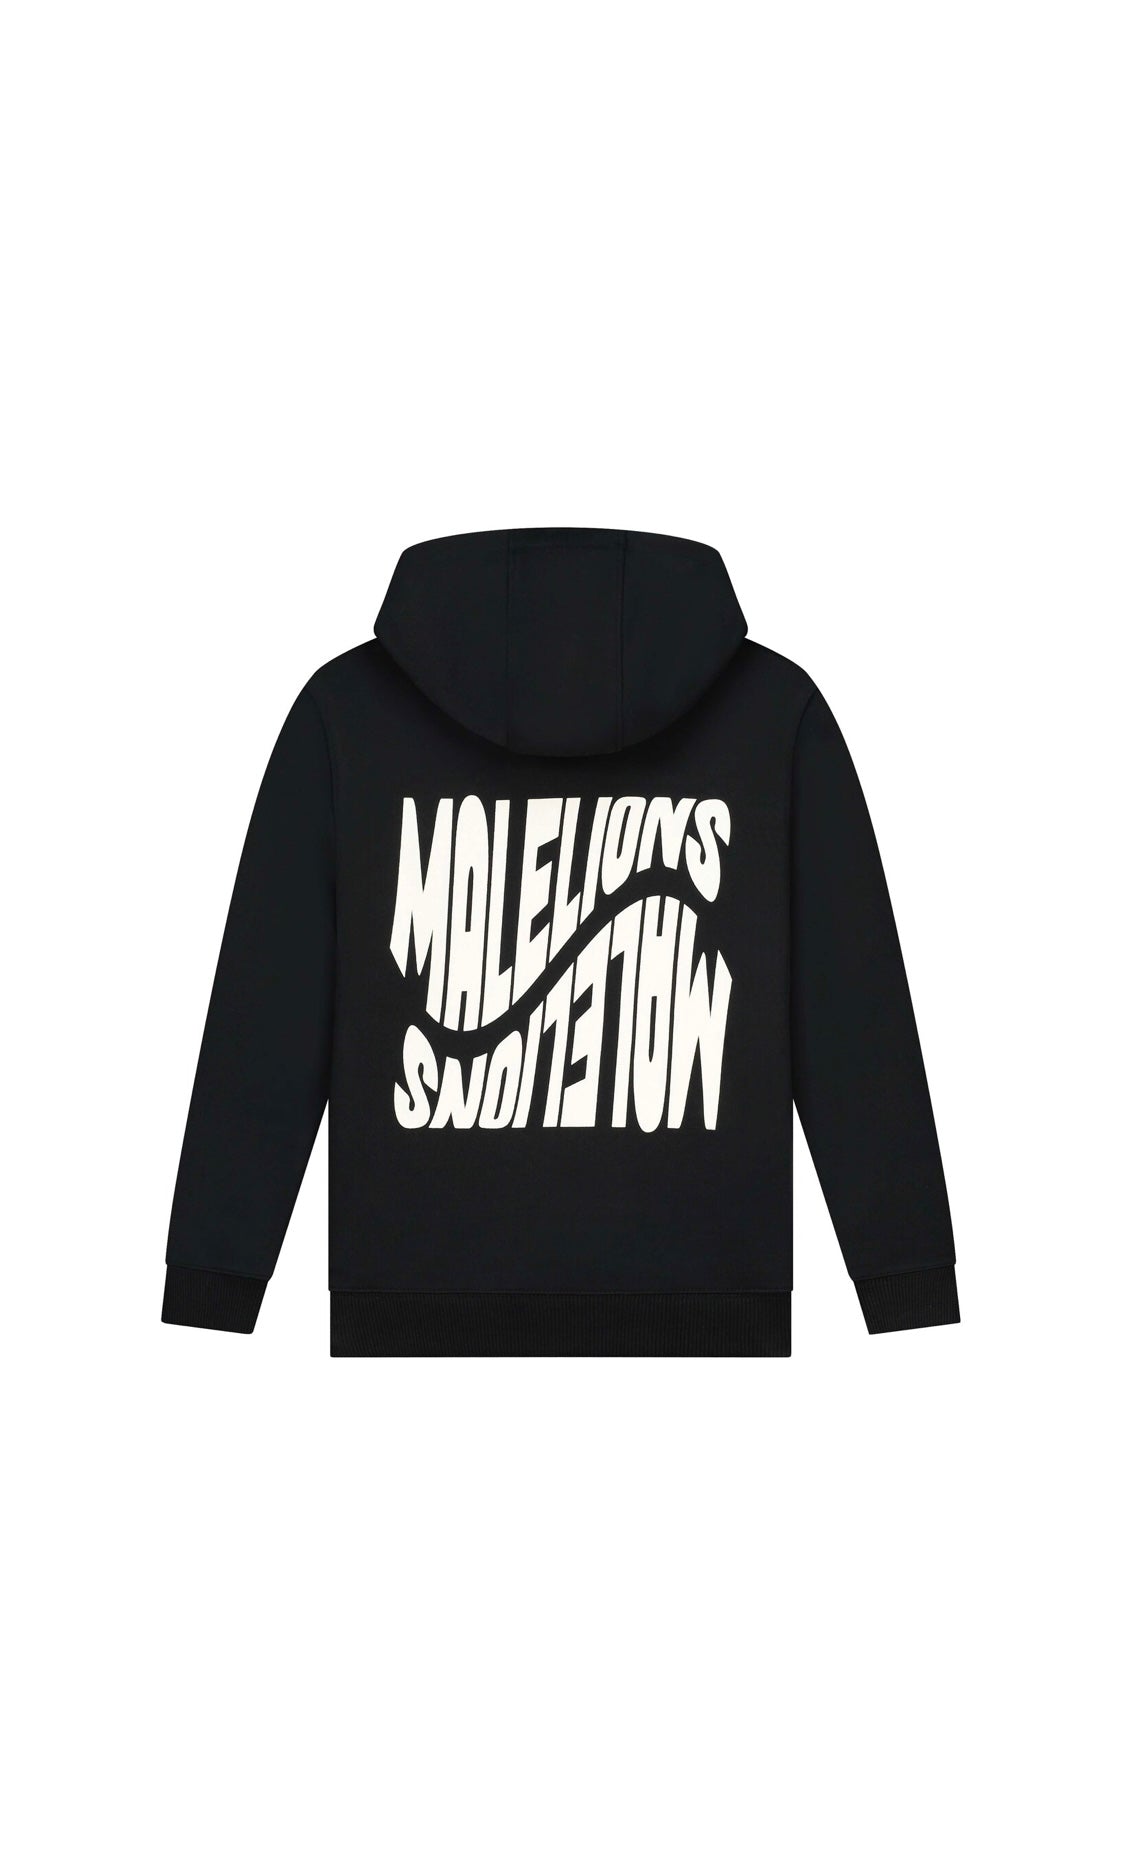 Malelions hoodie graphic